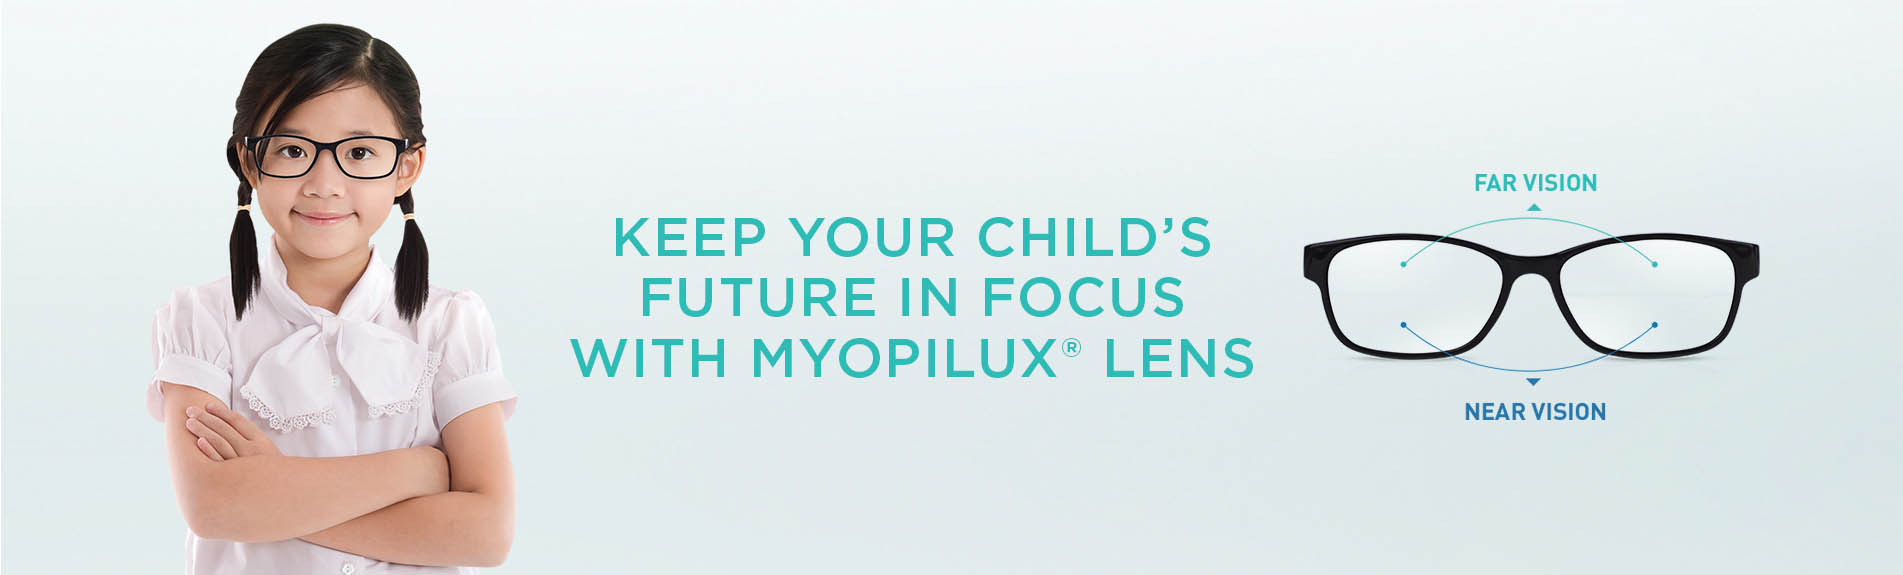 Myopilux Lenses